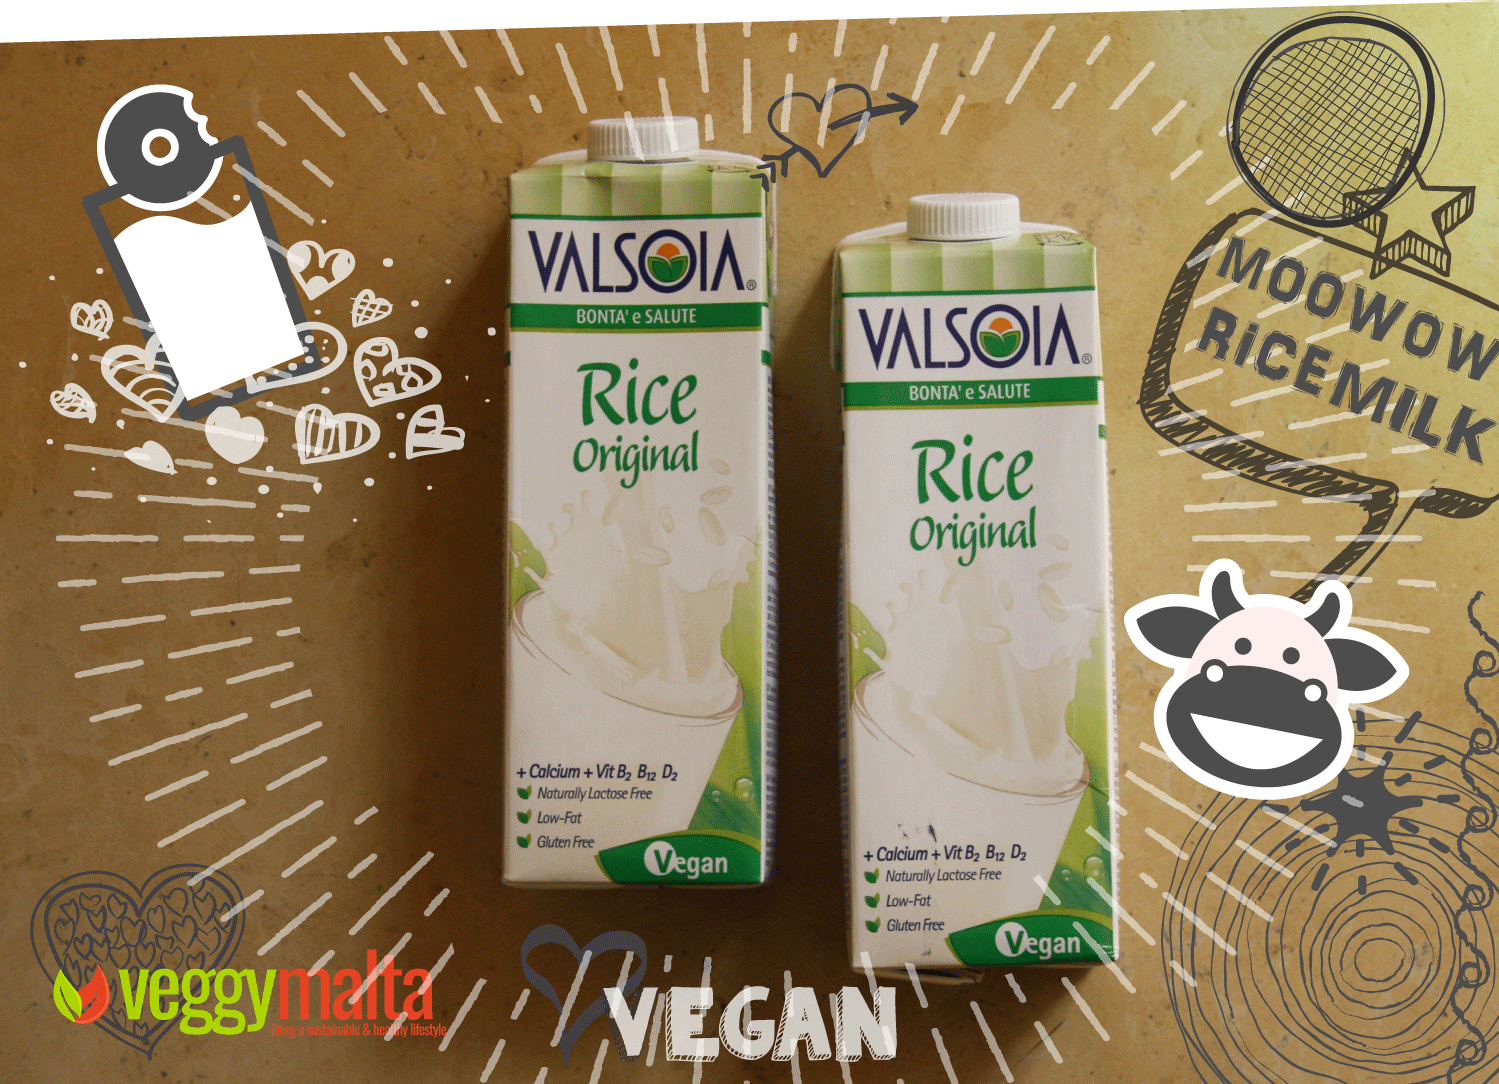 valsoia-rice--milk-wow